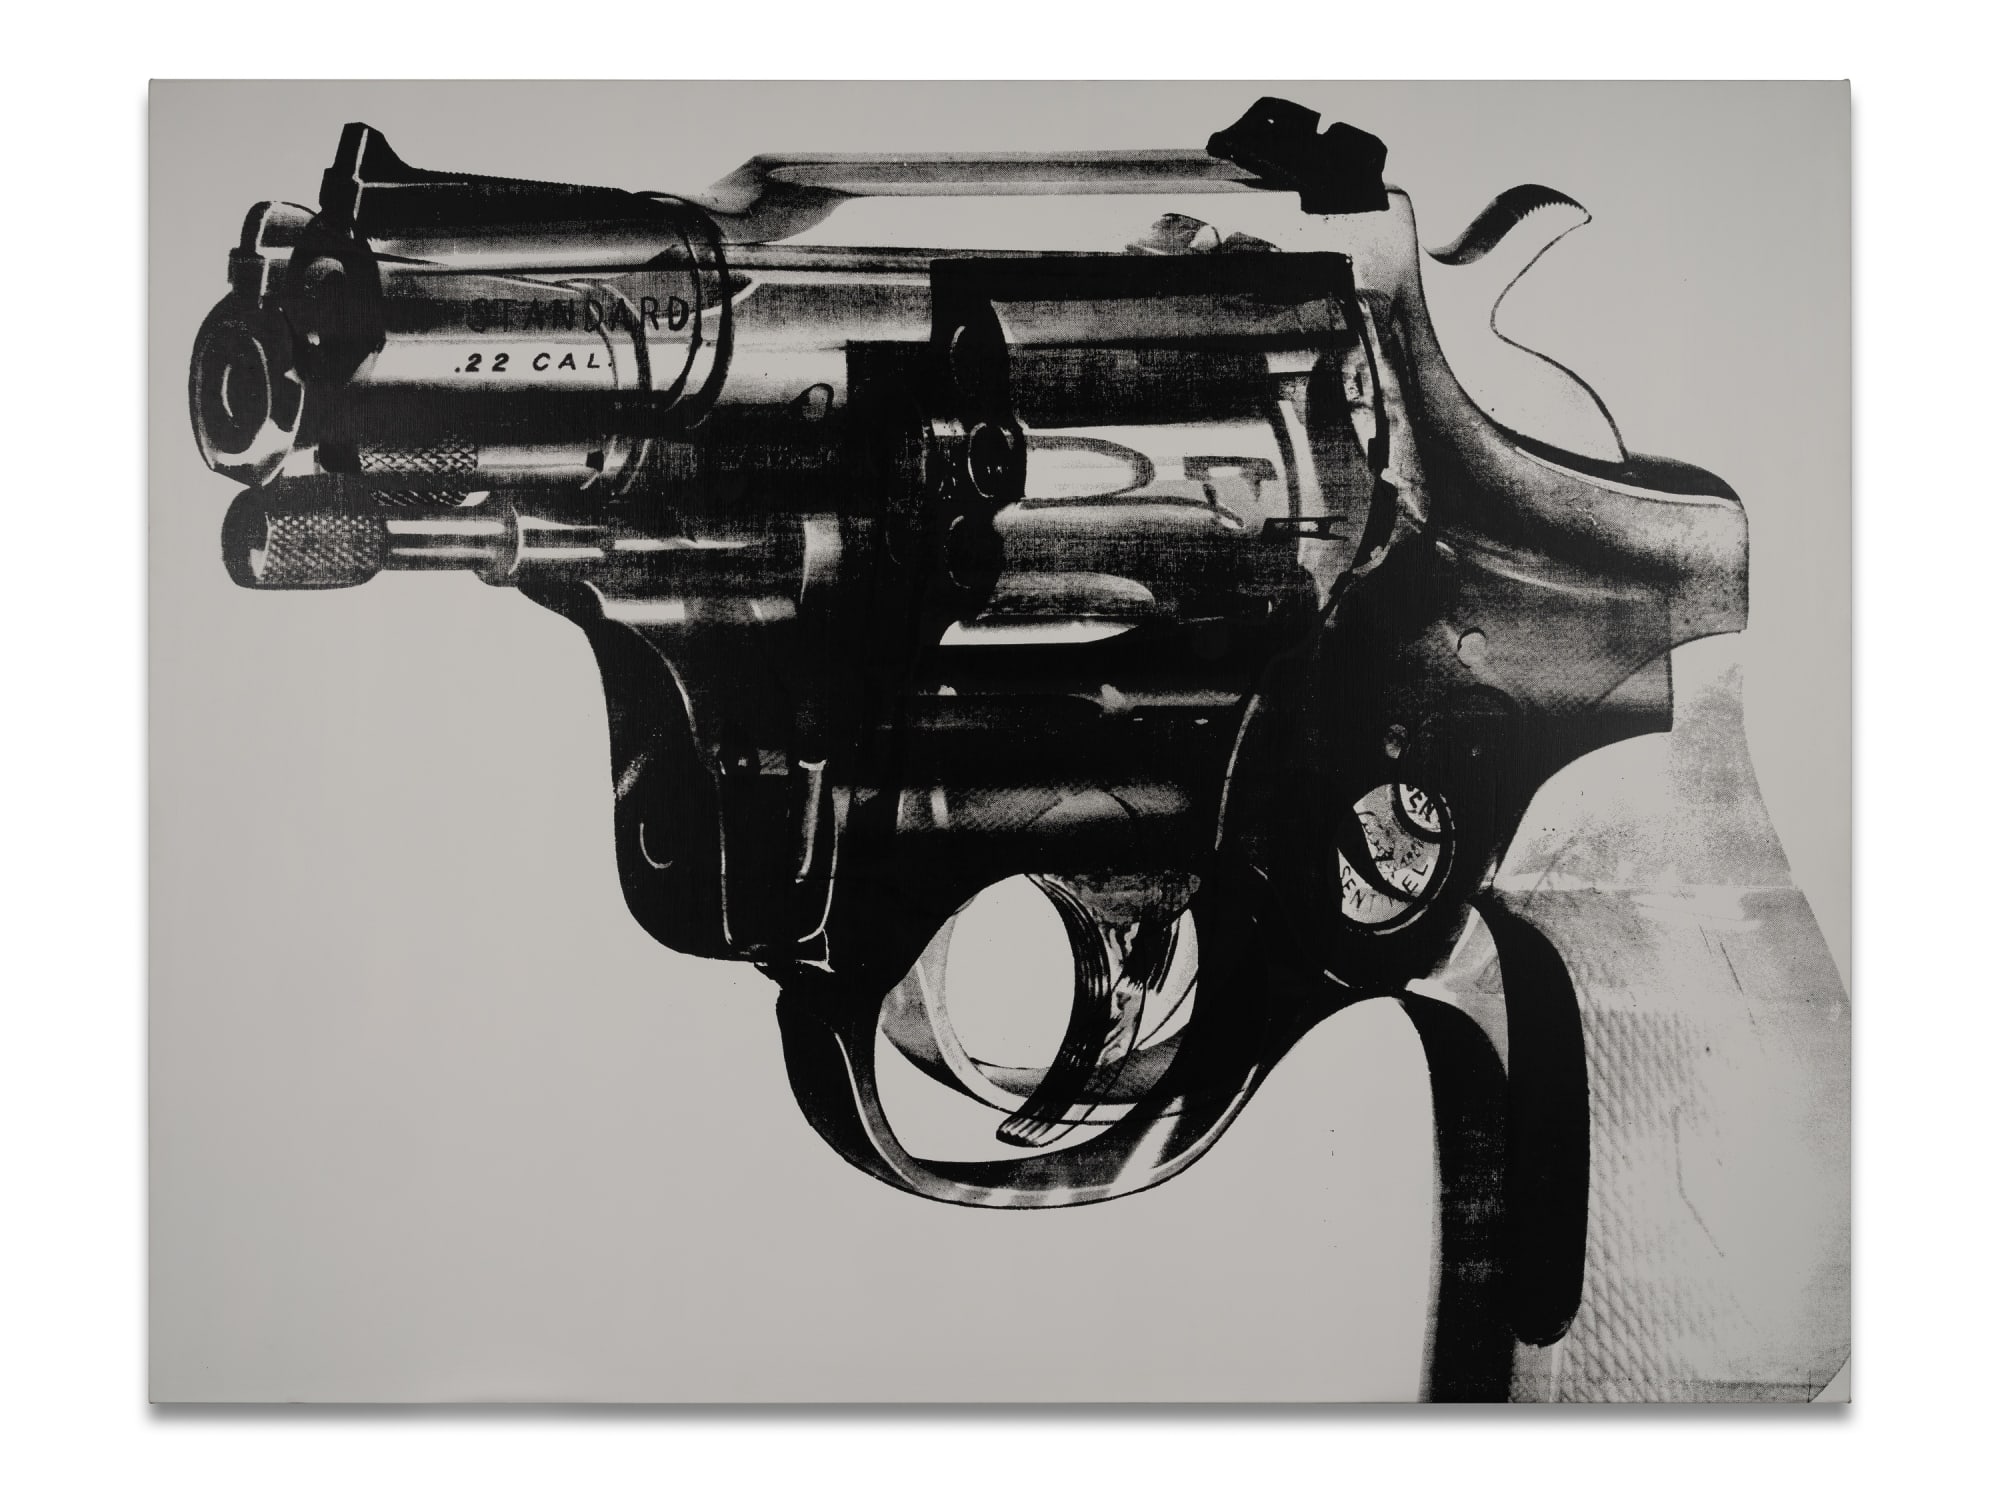 Andy Warhol, Gun, 1981-1982